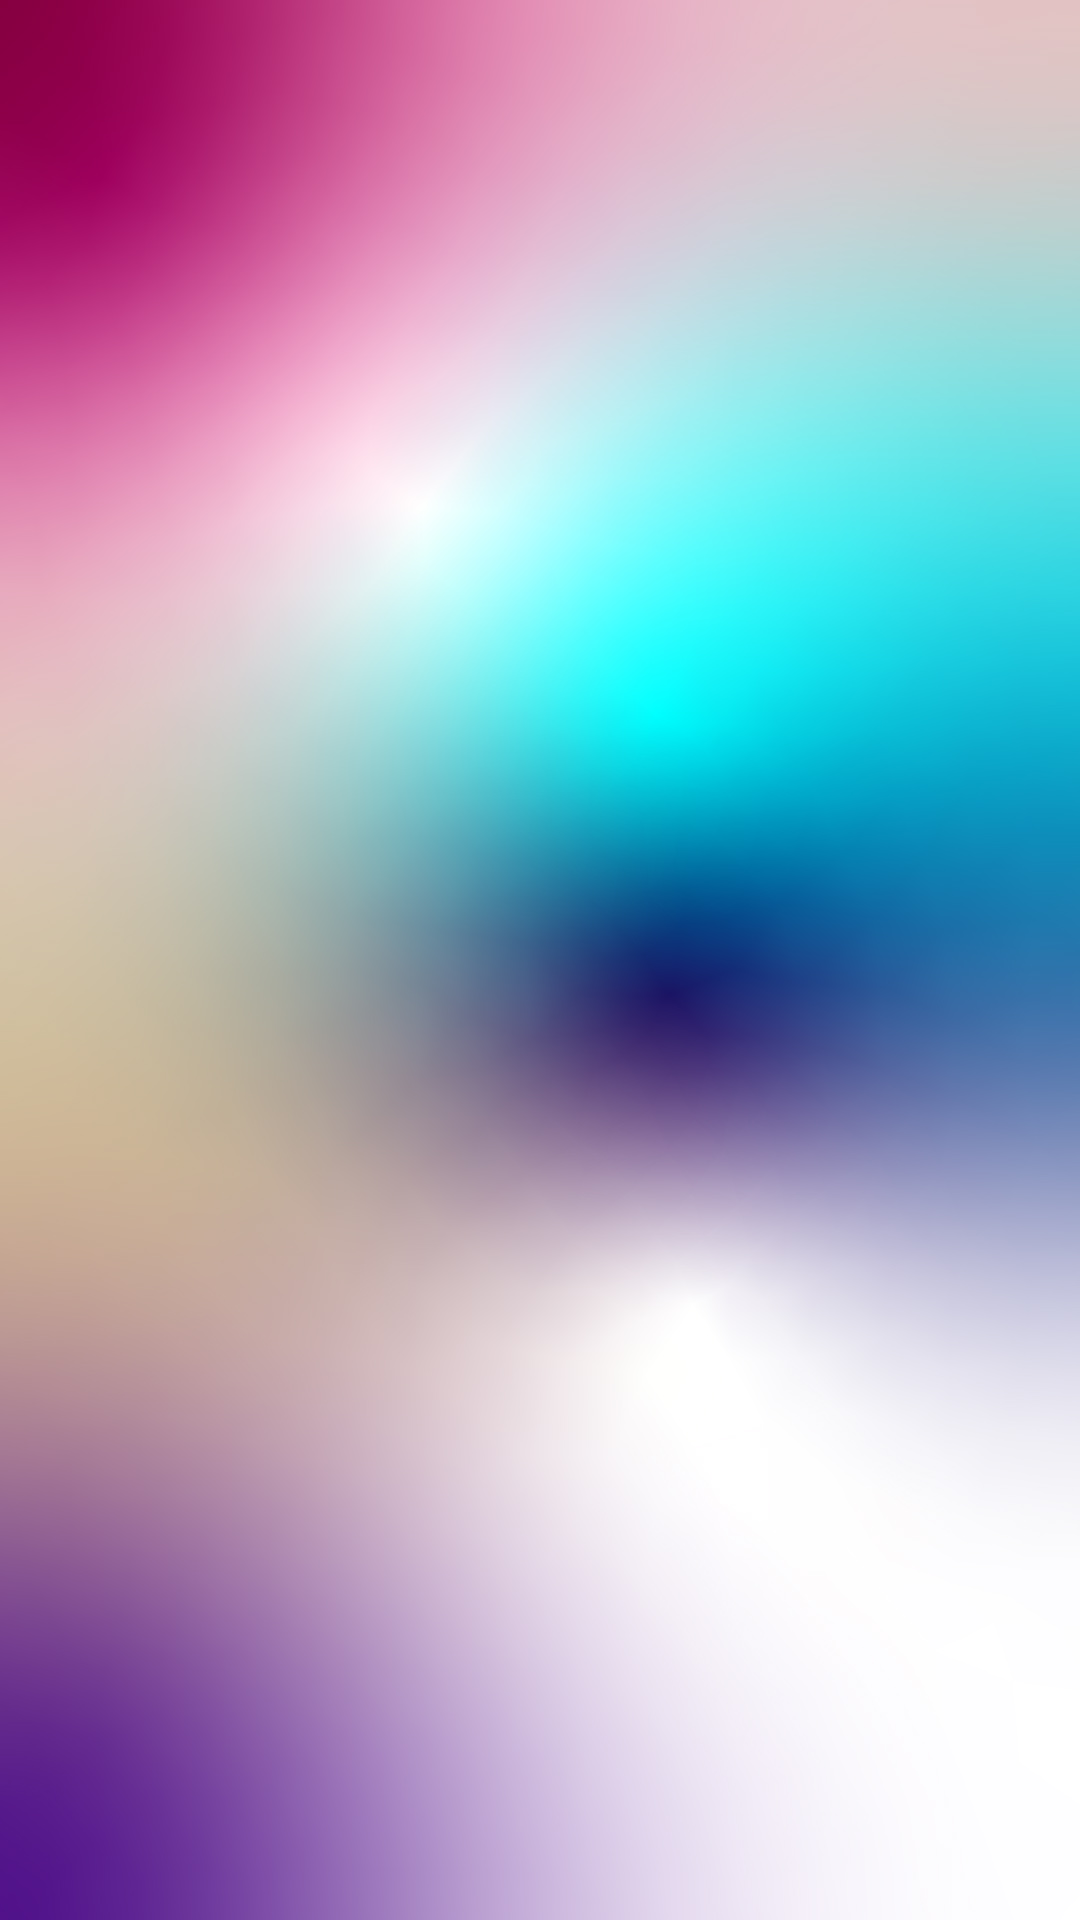 Blue fog texture png background full hd p download. - veeForu